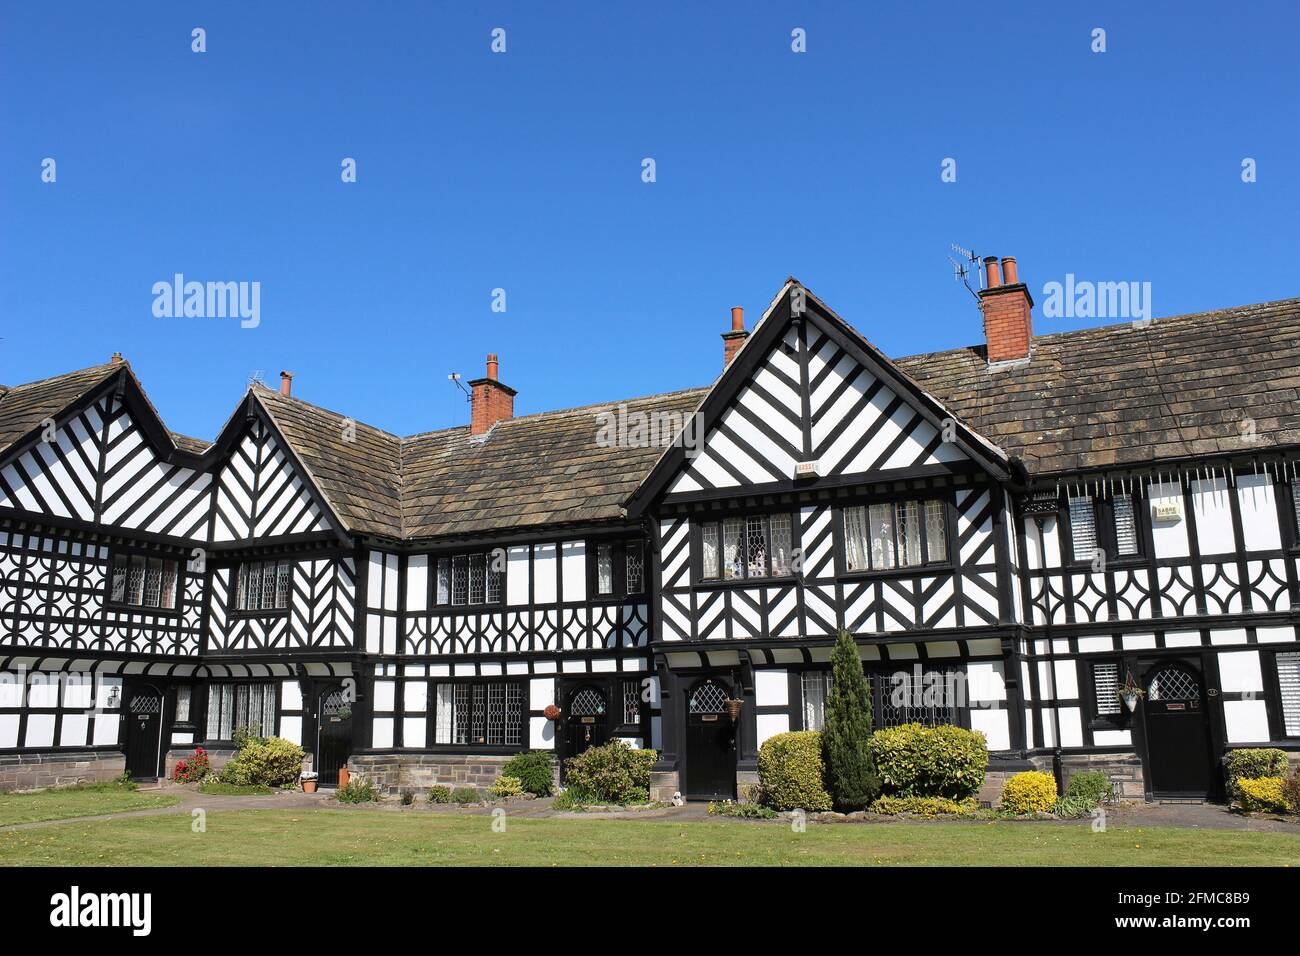 Mock Tudor Architecture in Port Sunlight Model Village, Wirral, UK Stock Photo